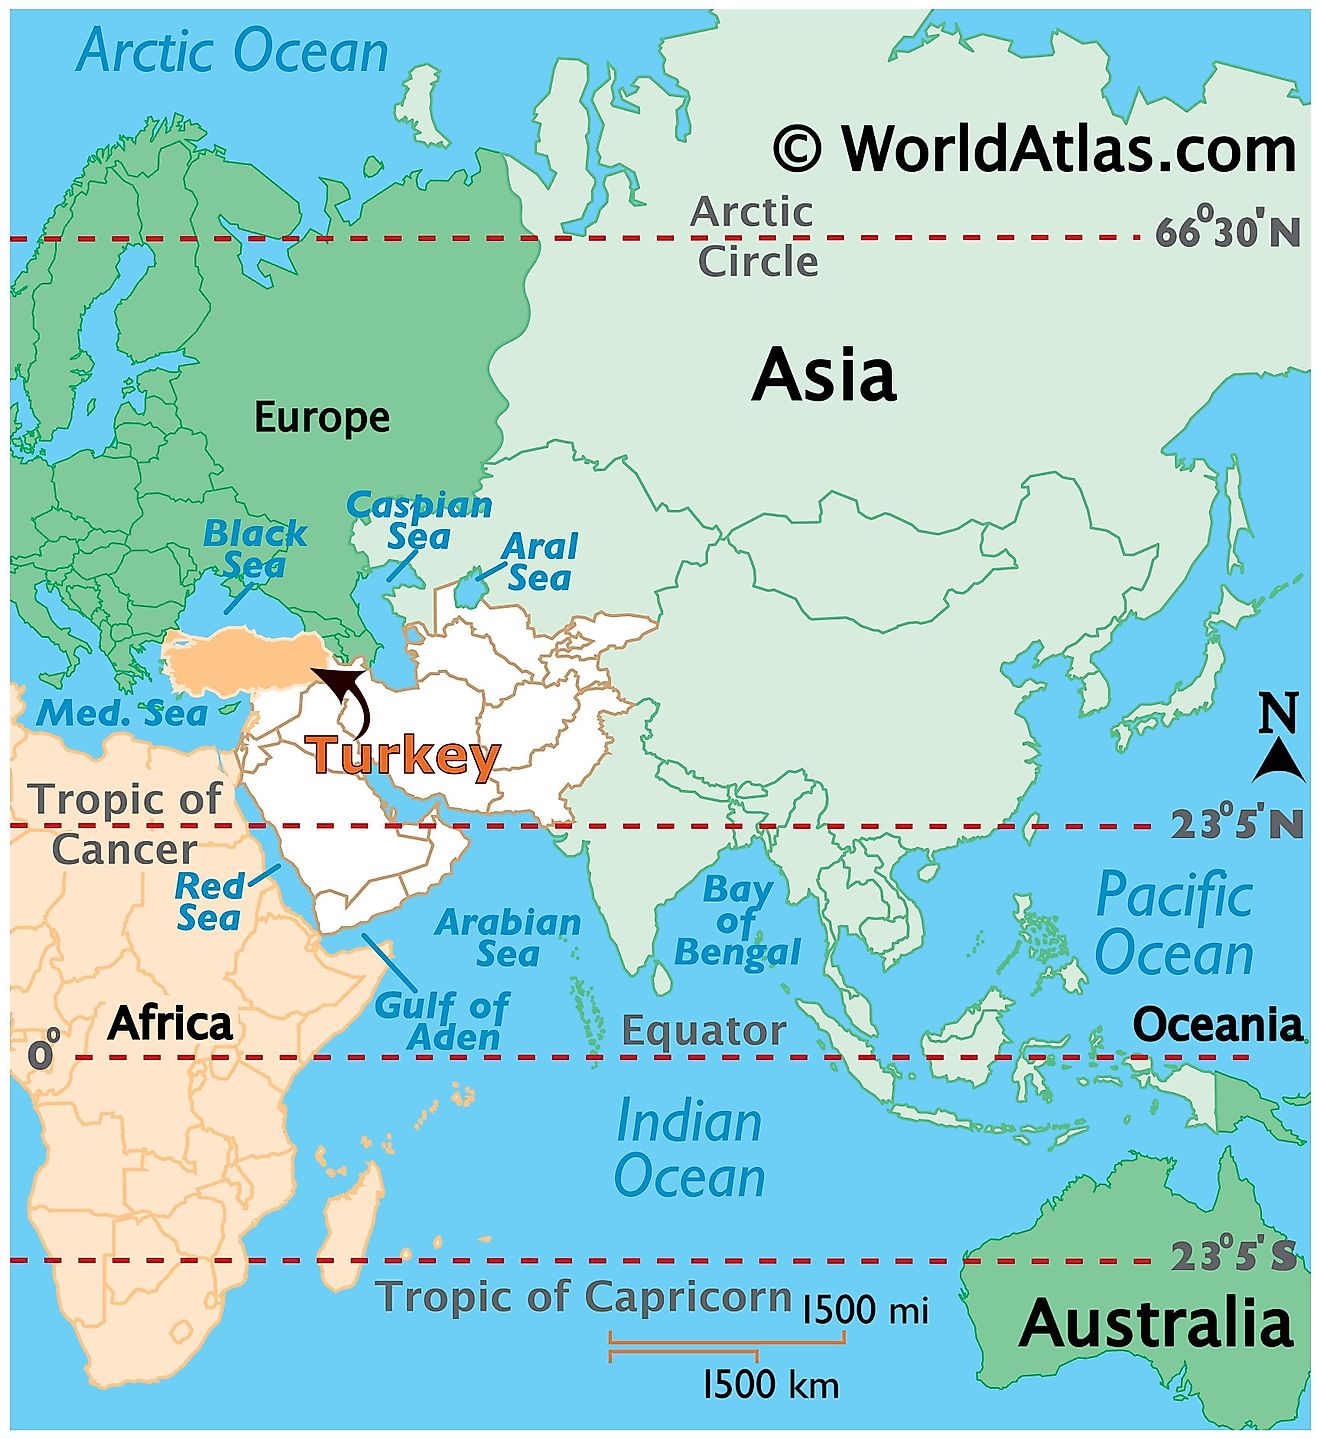 Turkey Maps & Facts - World Atlas